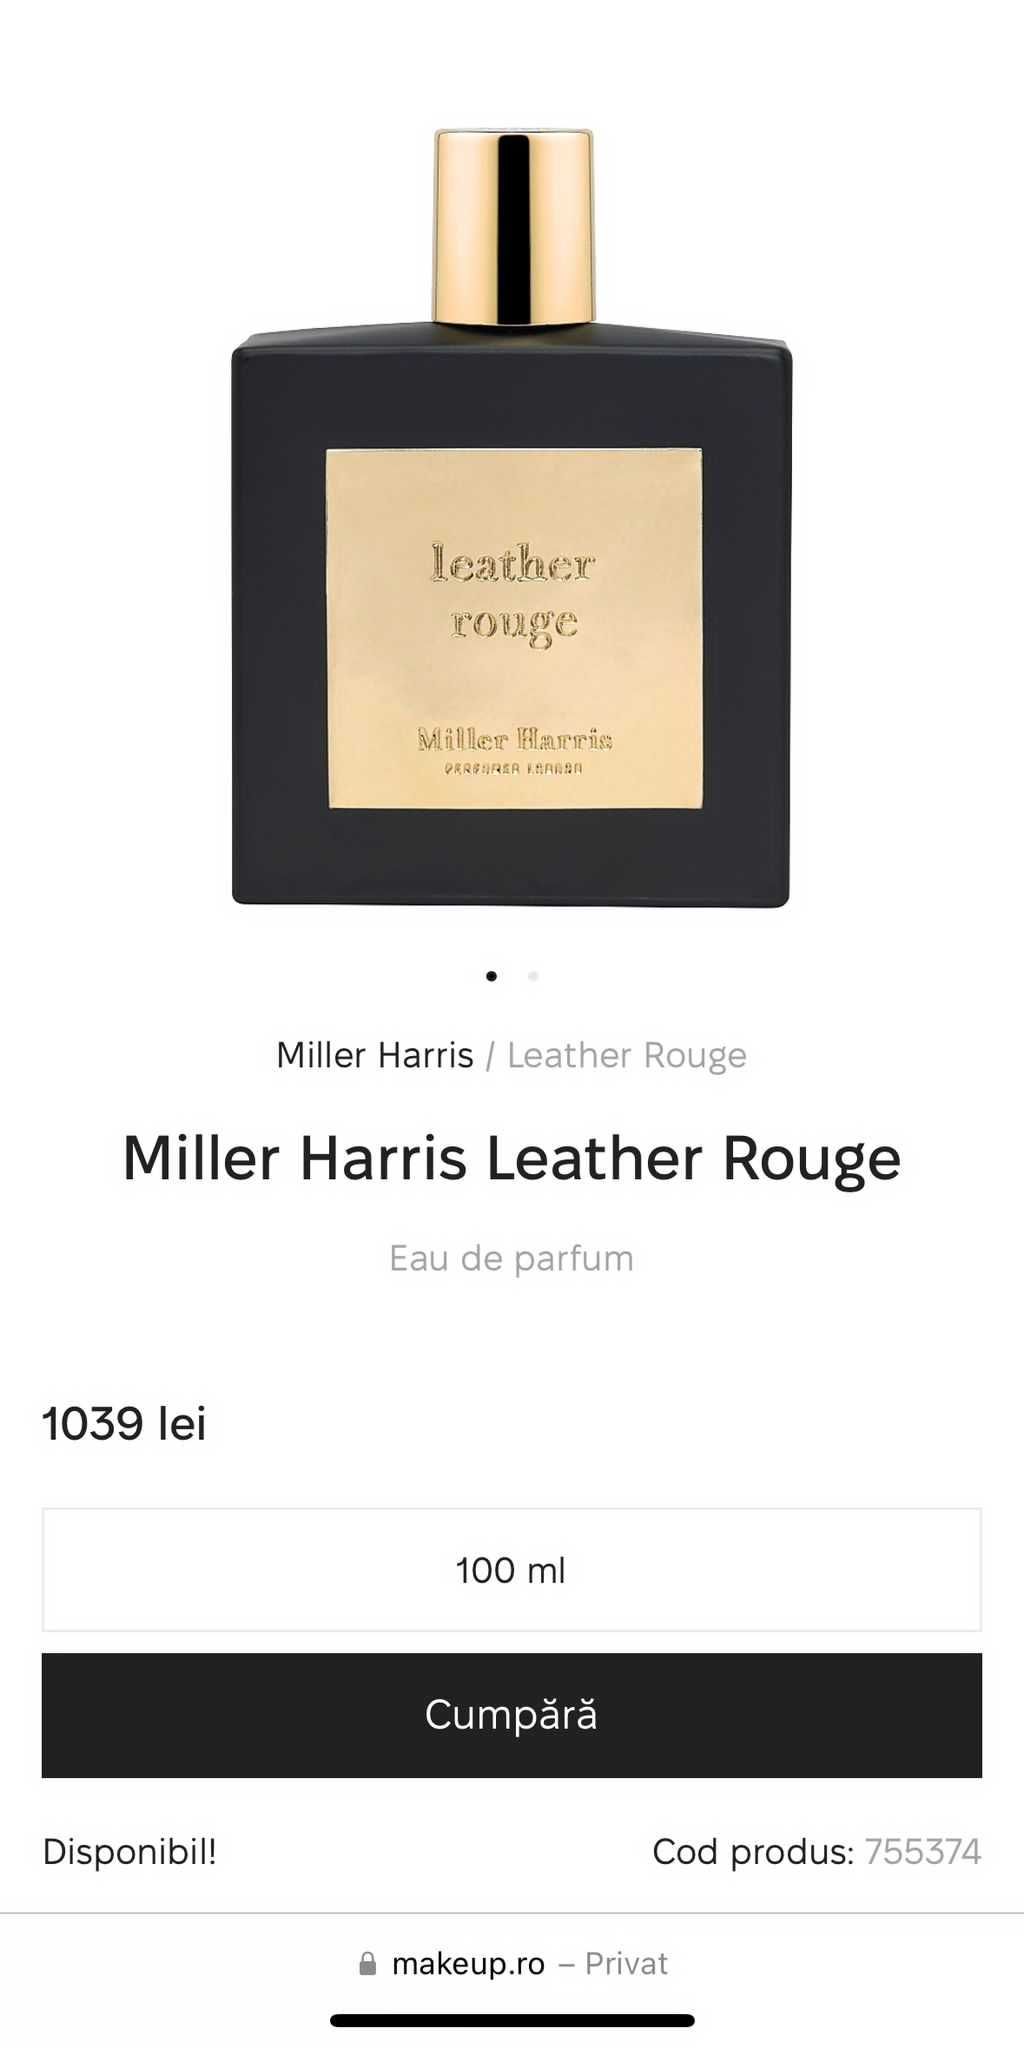 Miller Harris - Leather Rouge 100ml Apa de Parfum, 100% original, UK